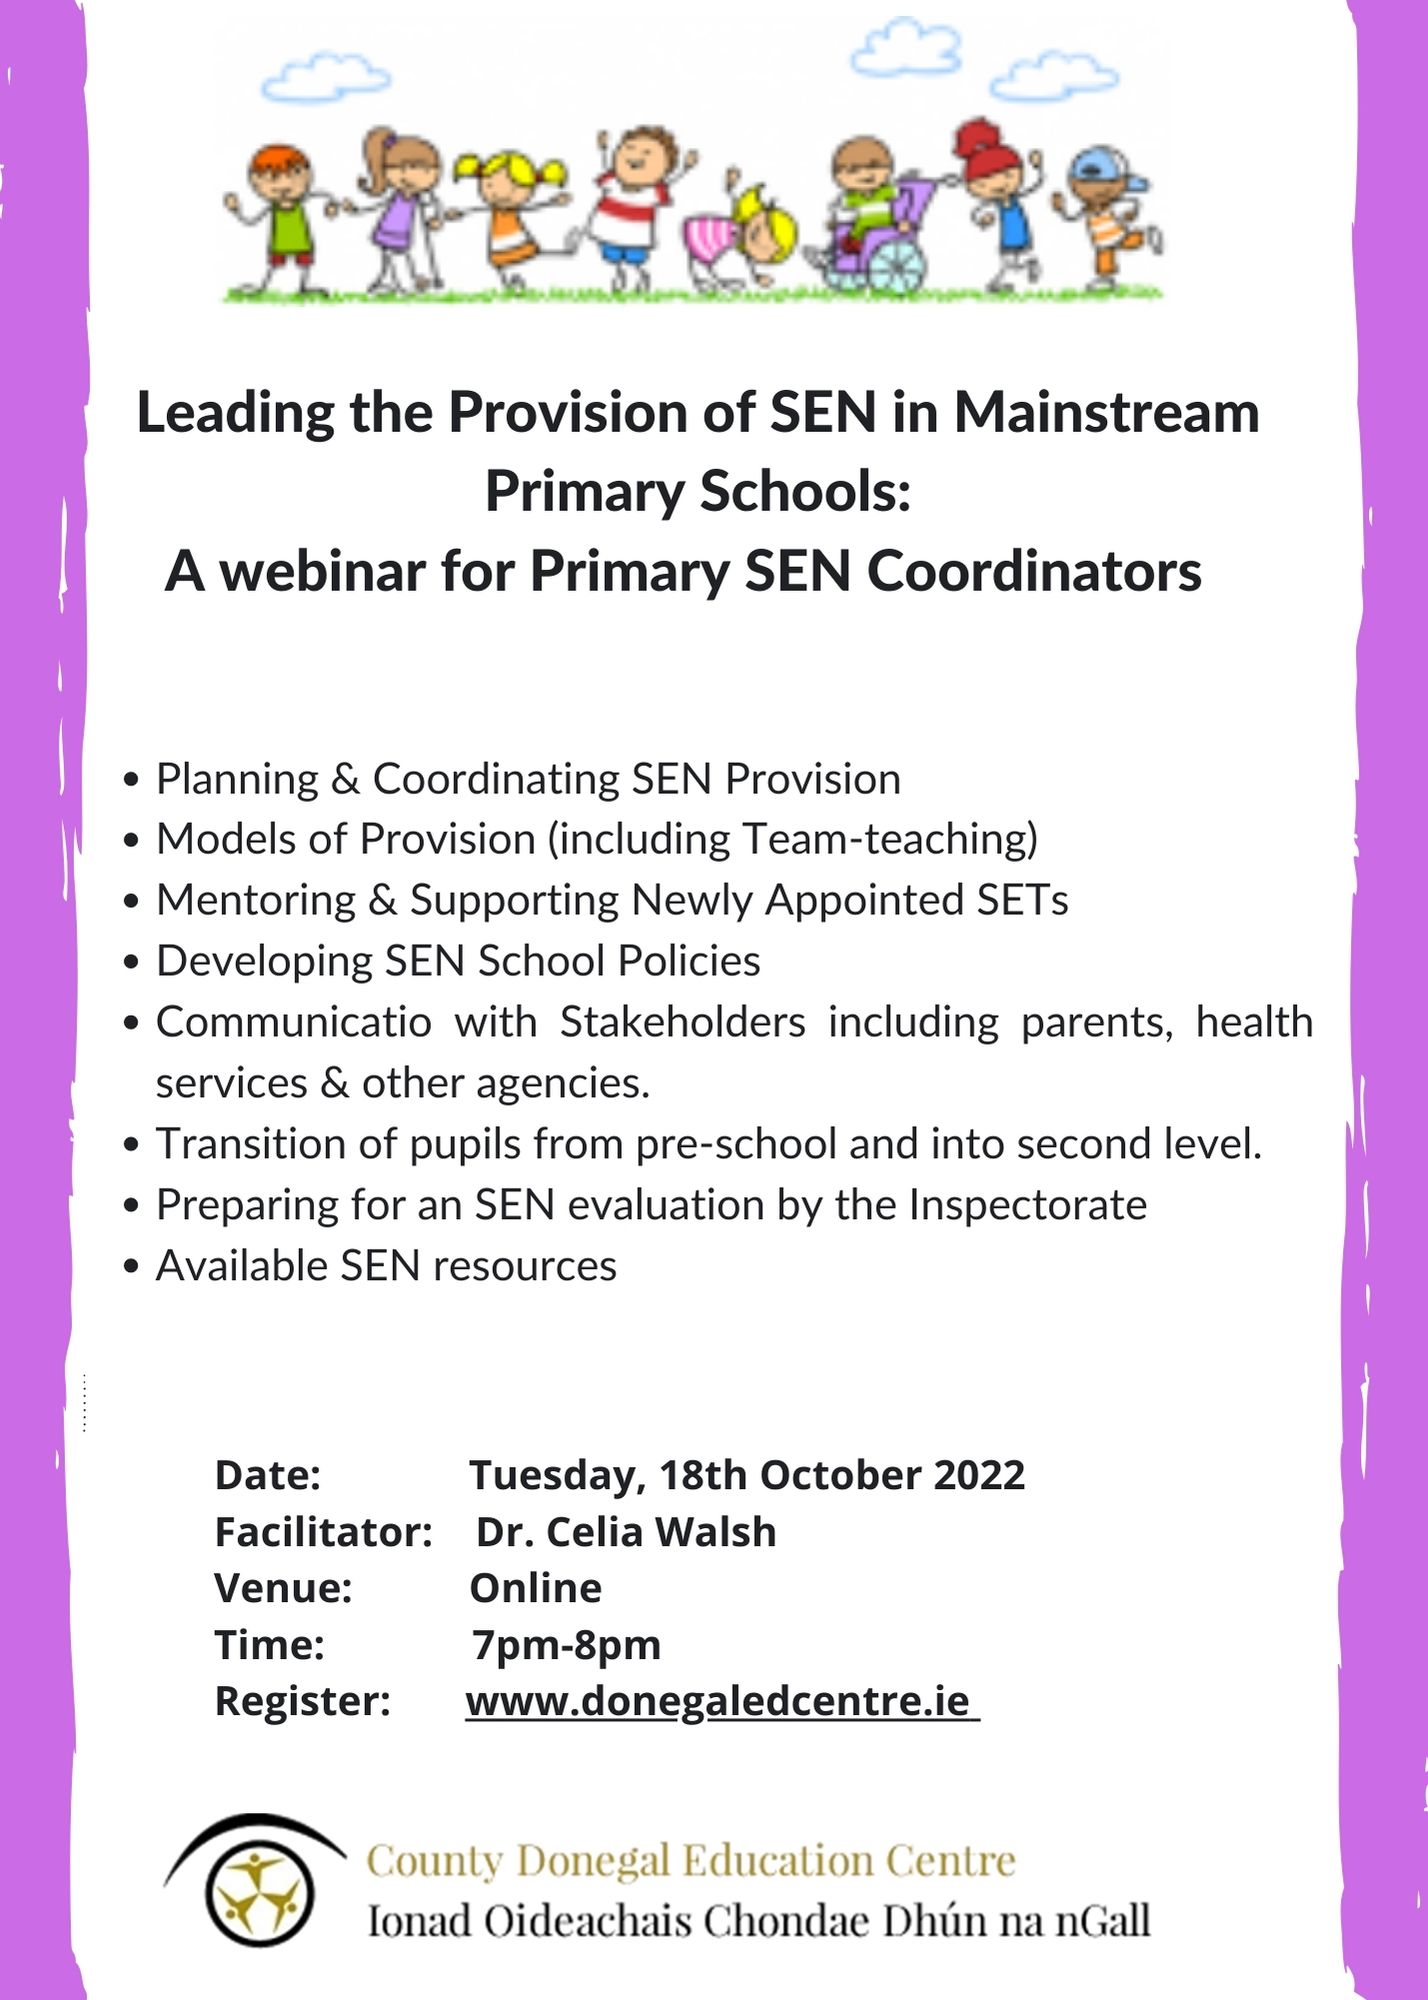 Leading the Provision of SEN in Mainstream Primary Schools A webinar for Primary SEN Coordinators 